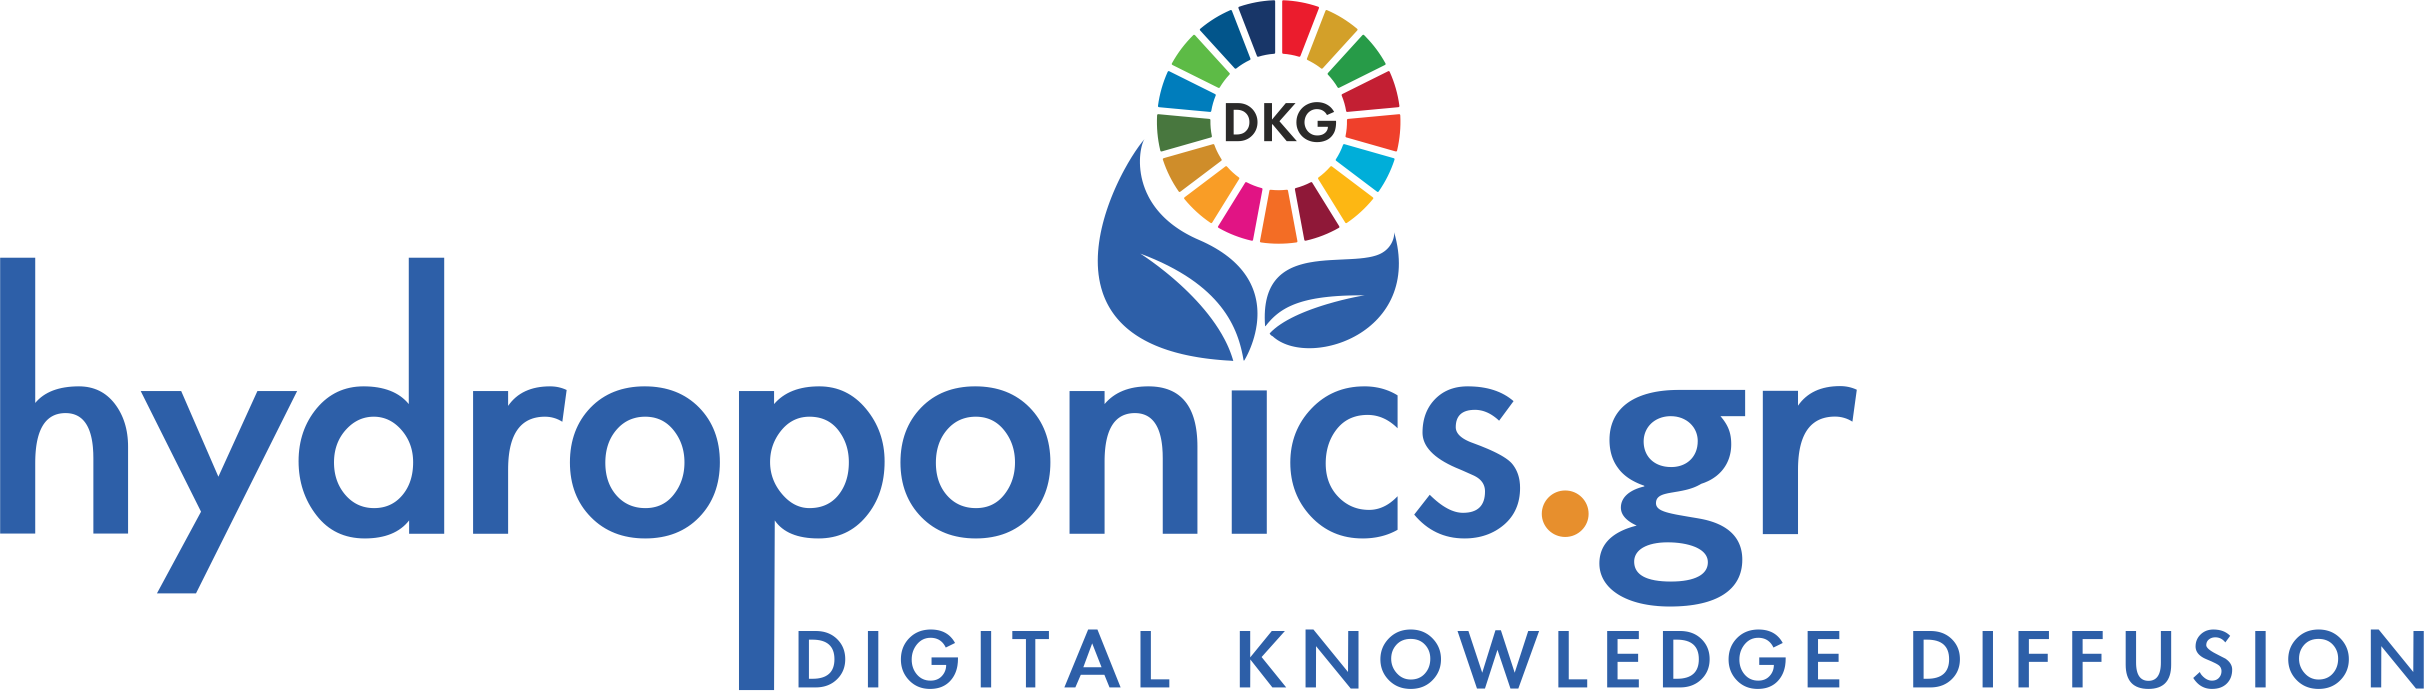 Hydroponics.gr Portal-Digital Knowledge Diffusion